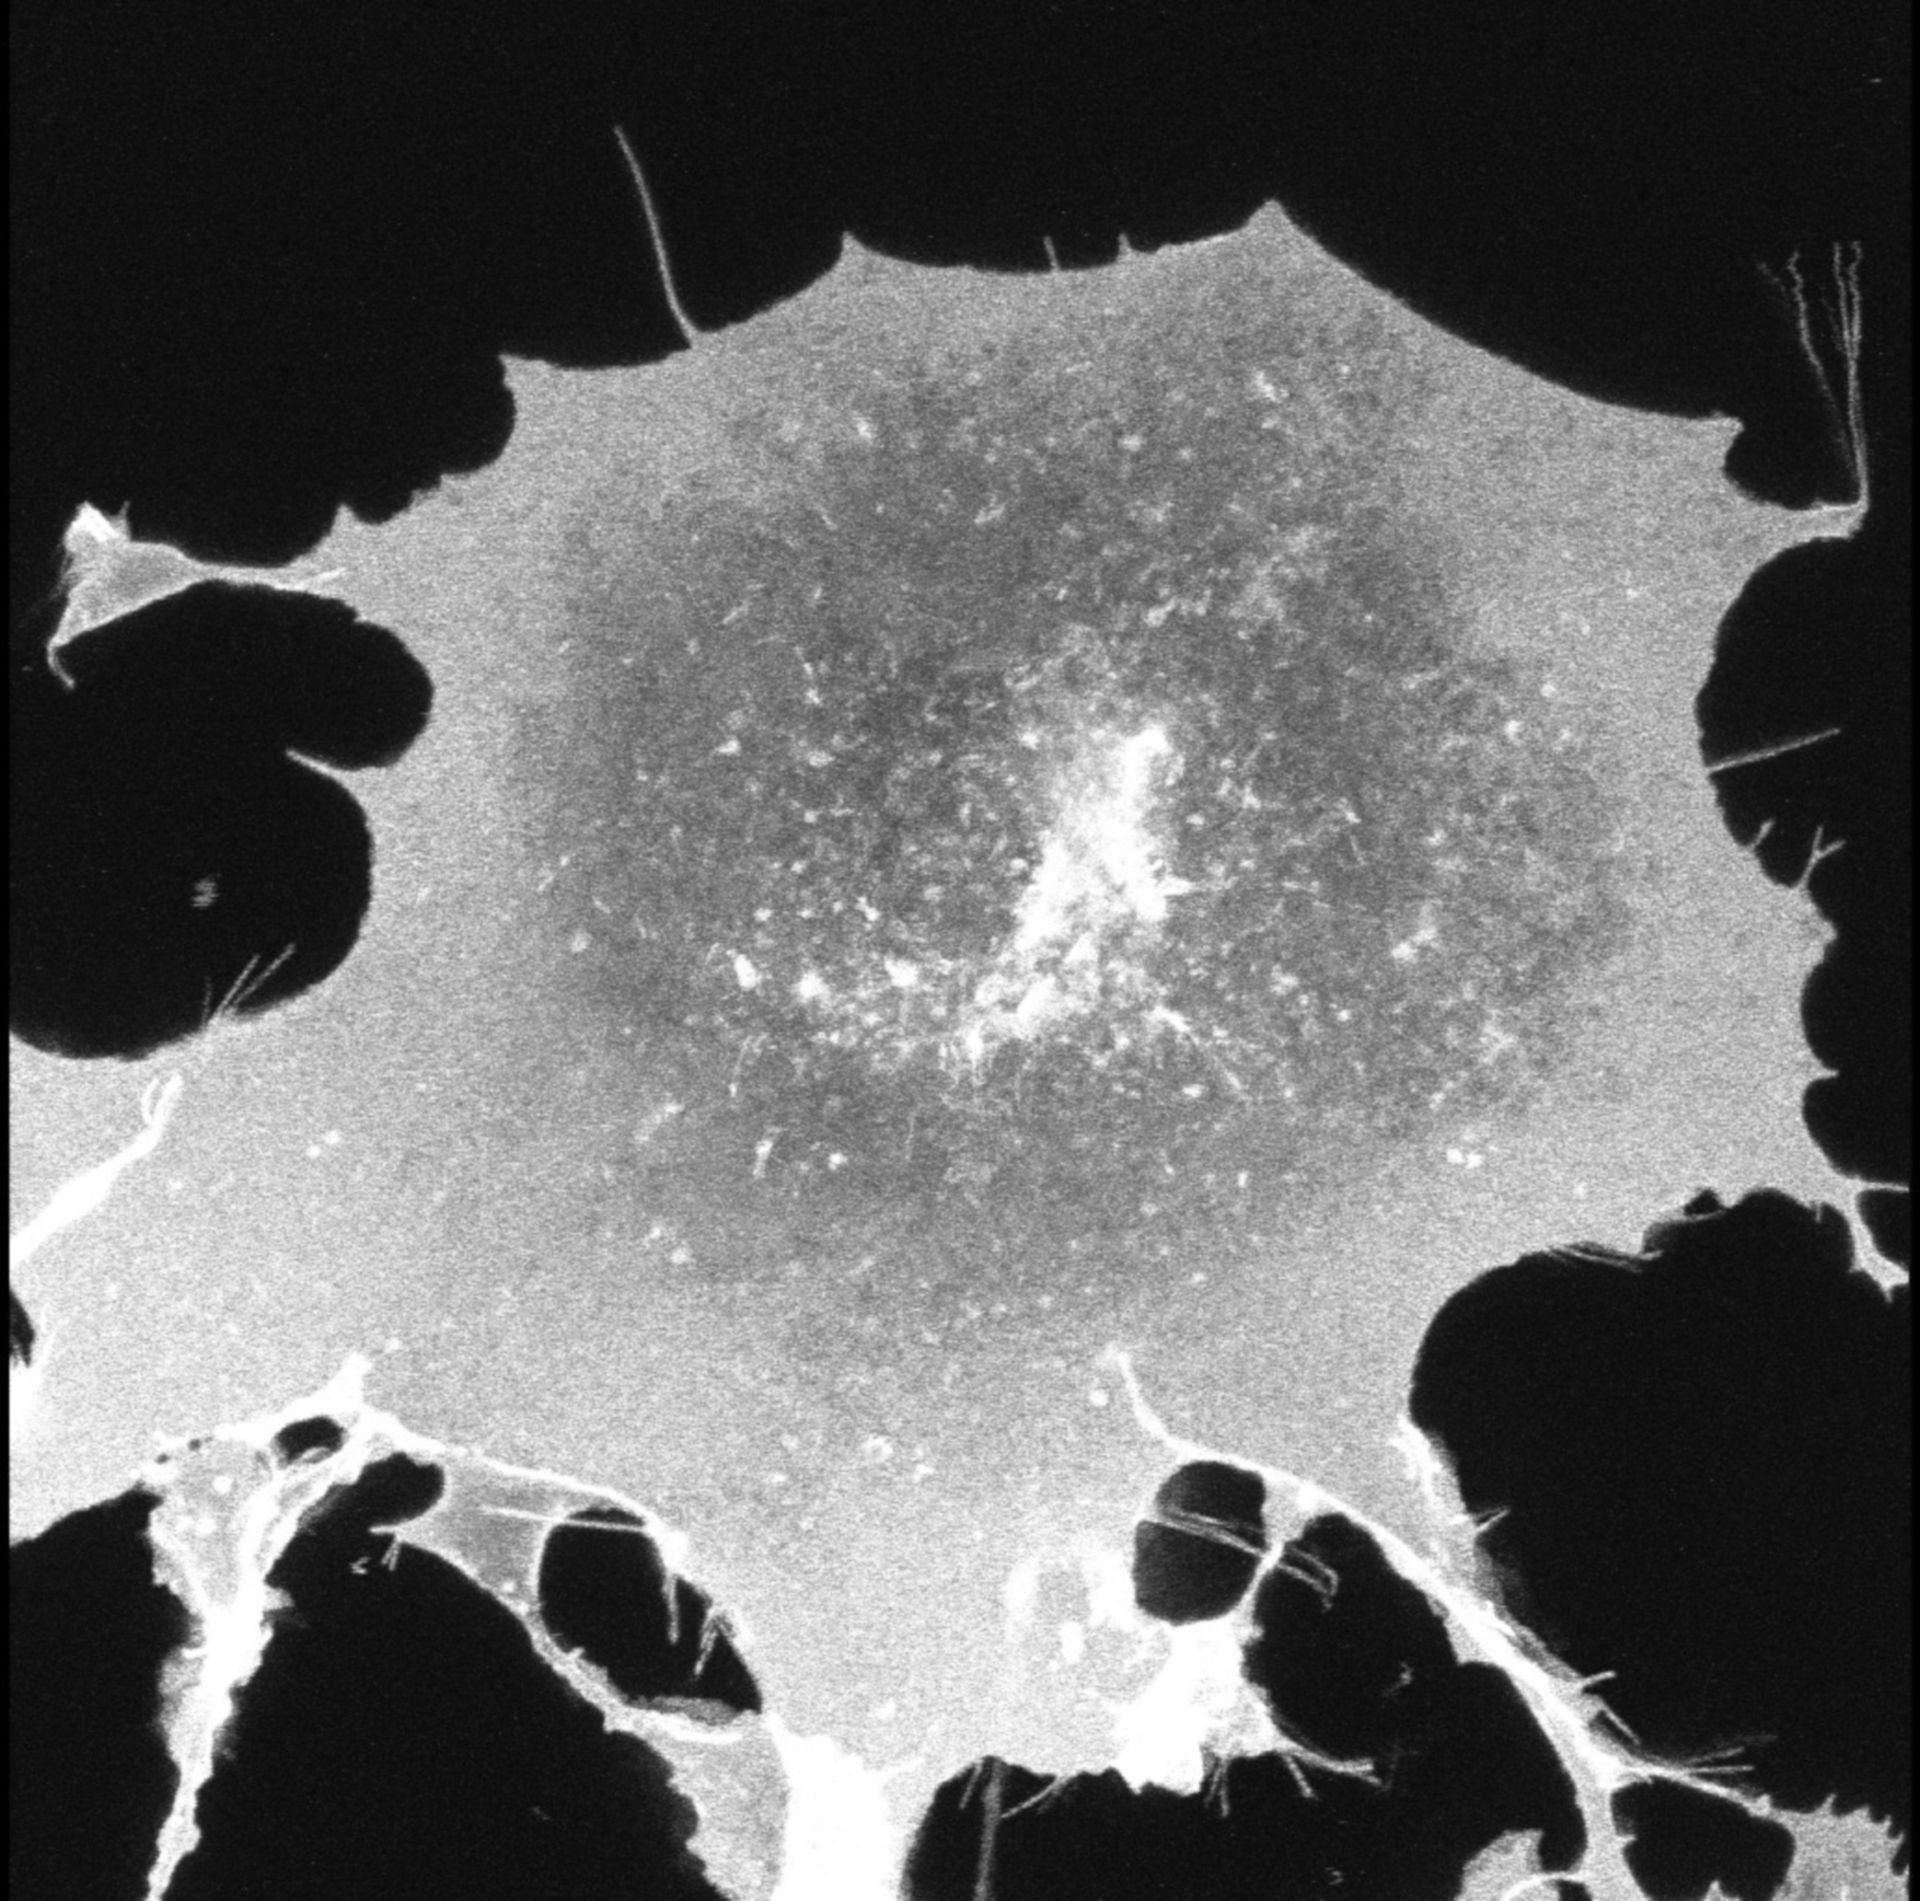 Chlorocebus sabaeus (Plasma membrane) - CIL:728